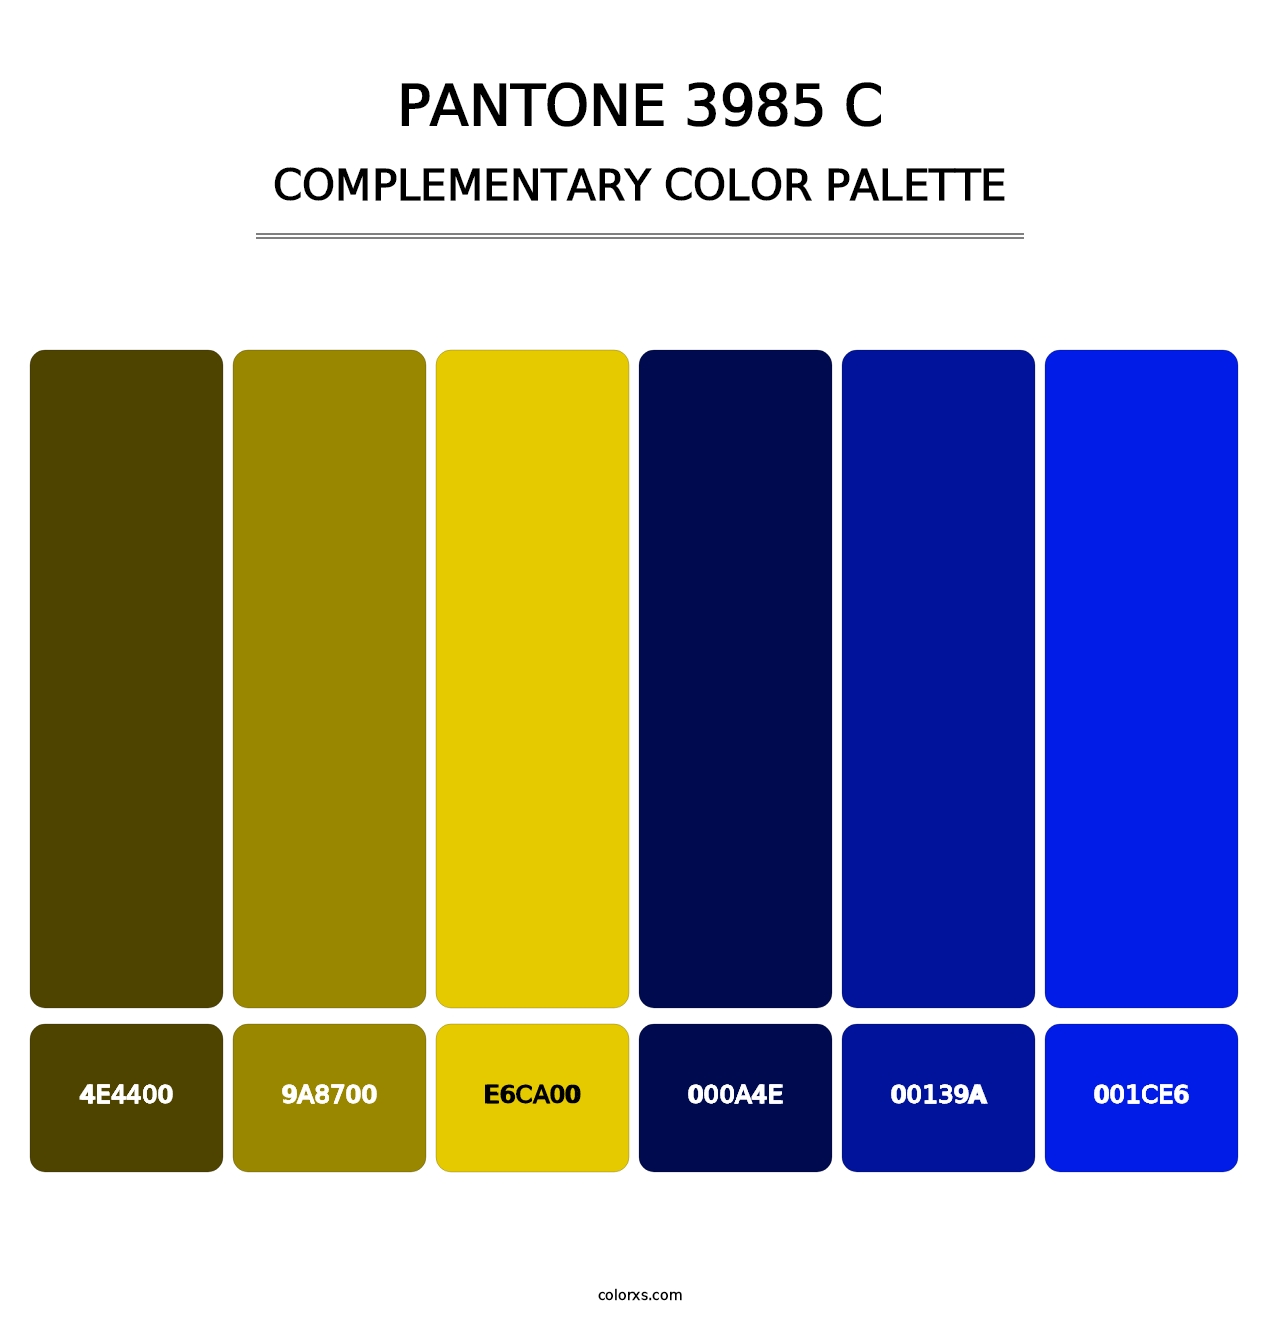 PANTONE 3985 C - Complementary Color Palette